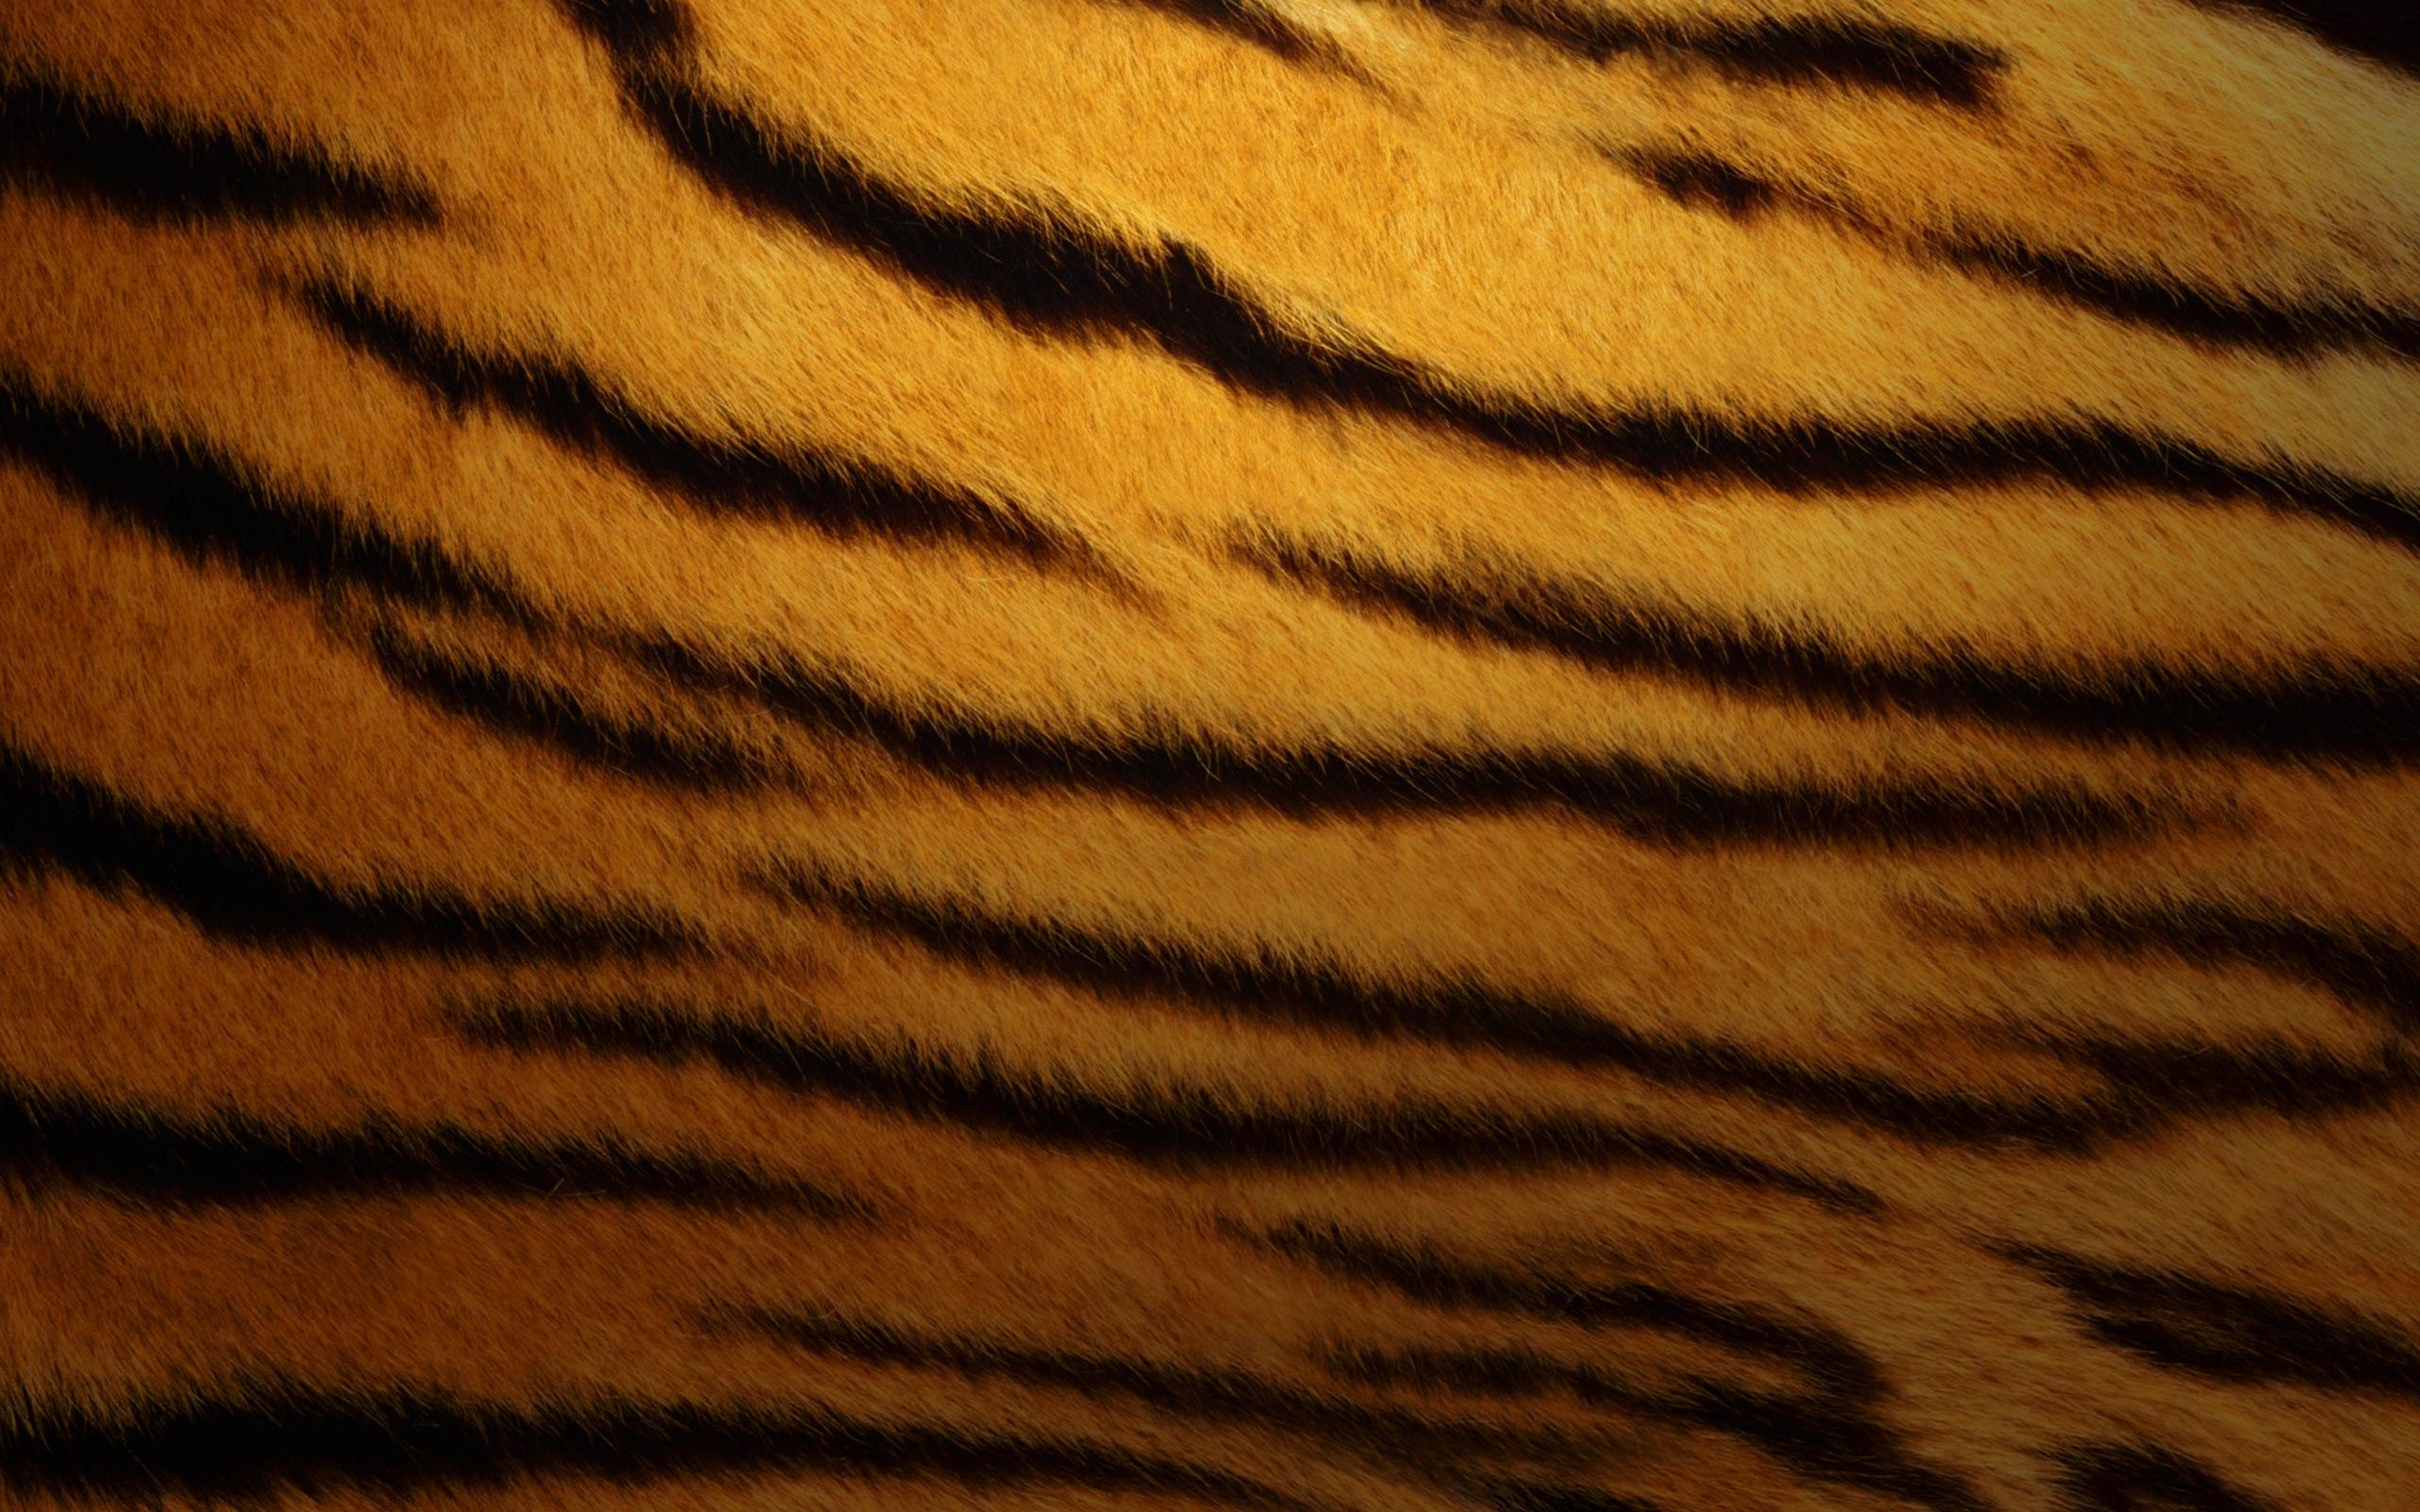 Fondos de piel de tigre | HD Wallpapers | ID # 11106